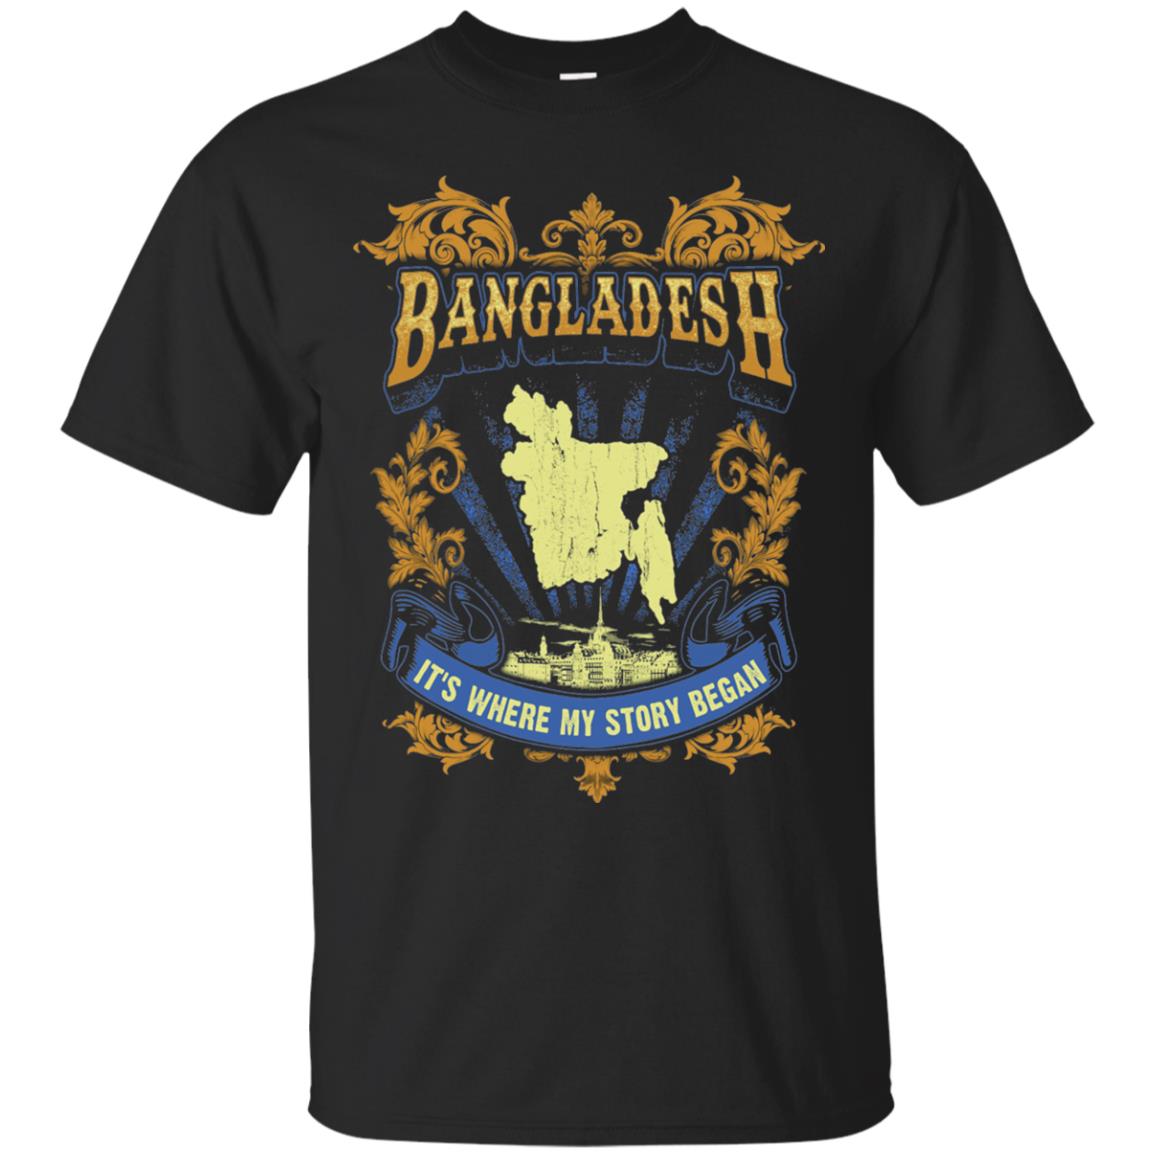 Bangladesh It_s Where My Story Began T-shirt